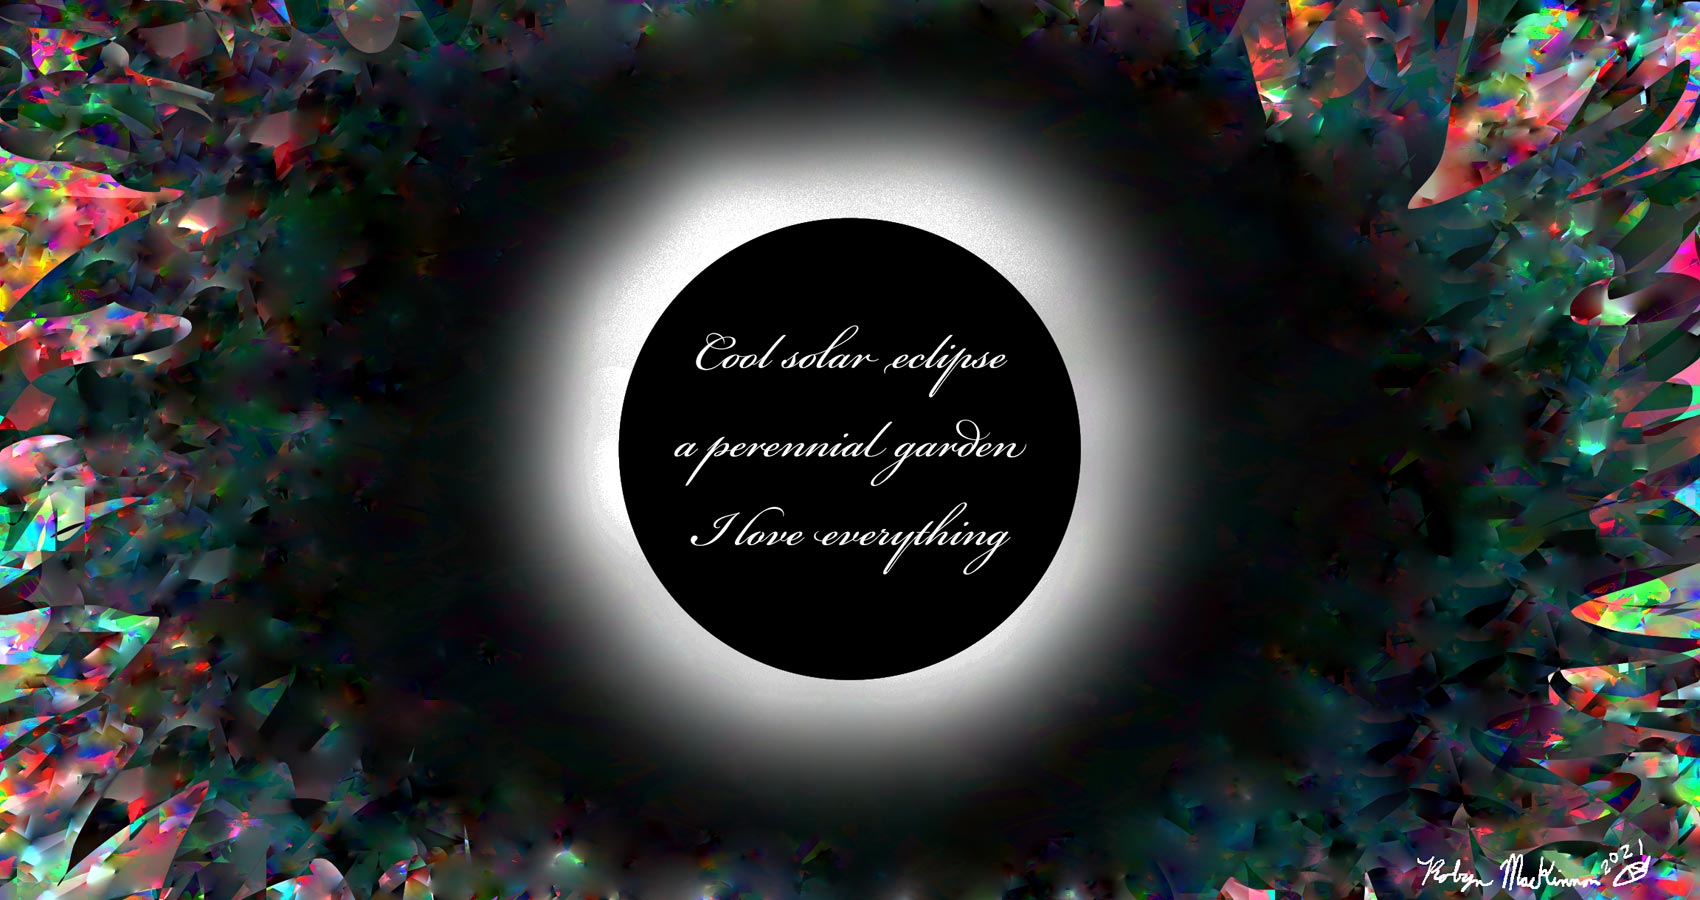 Eclipse Garden, a haiku by Robyn MacKinnon at Spillwords.com